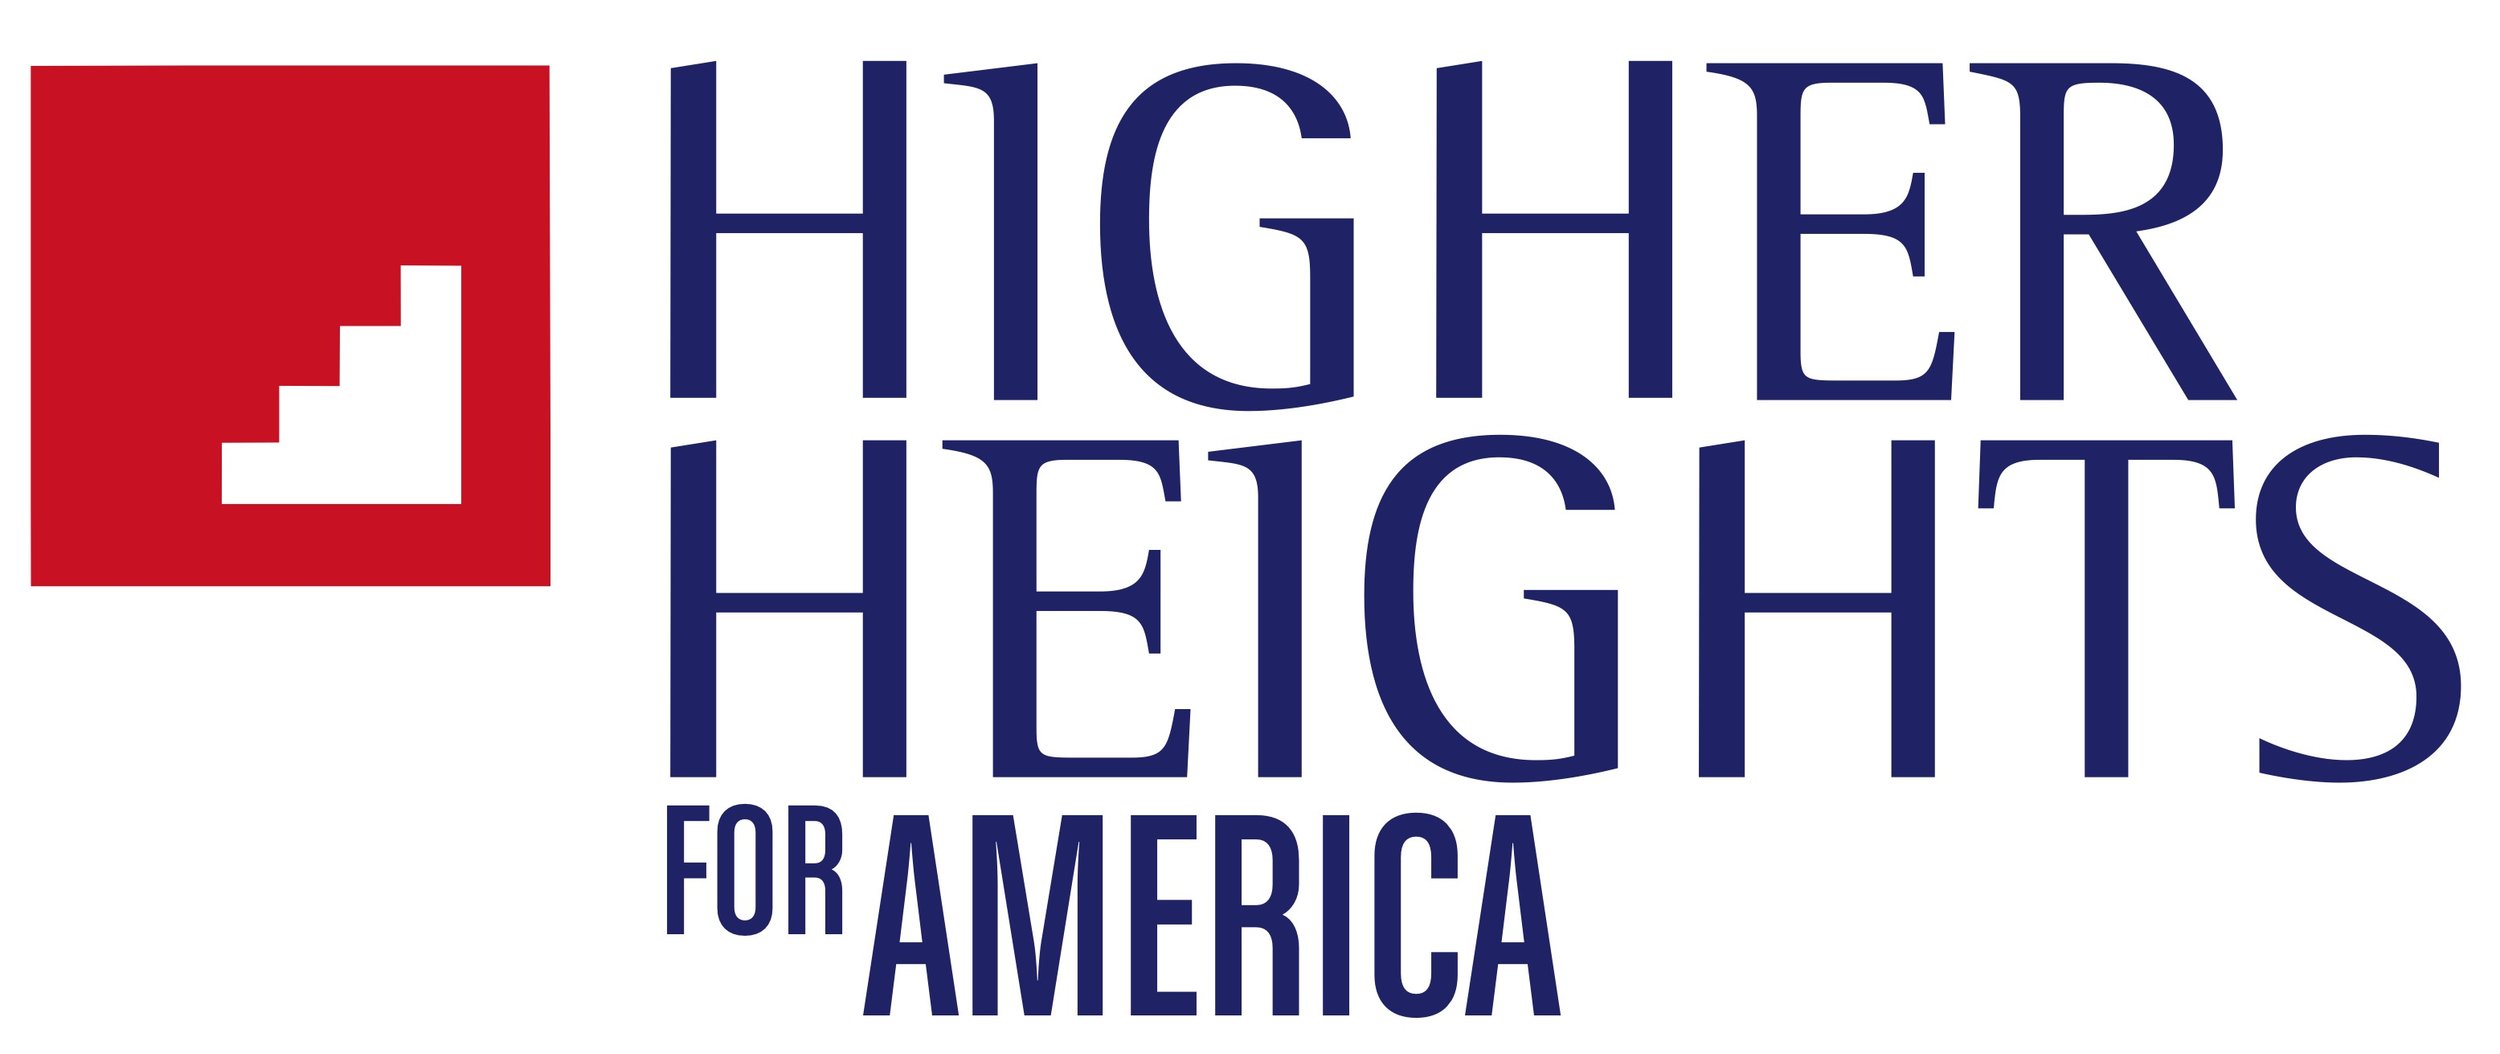 Higher Heights for America.jpg